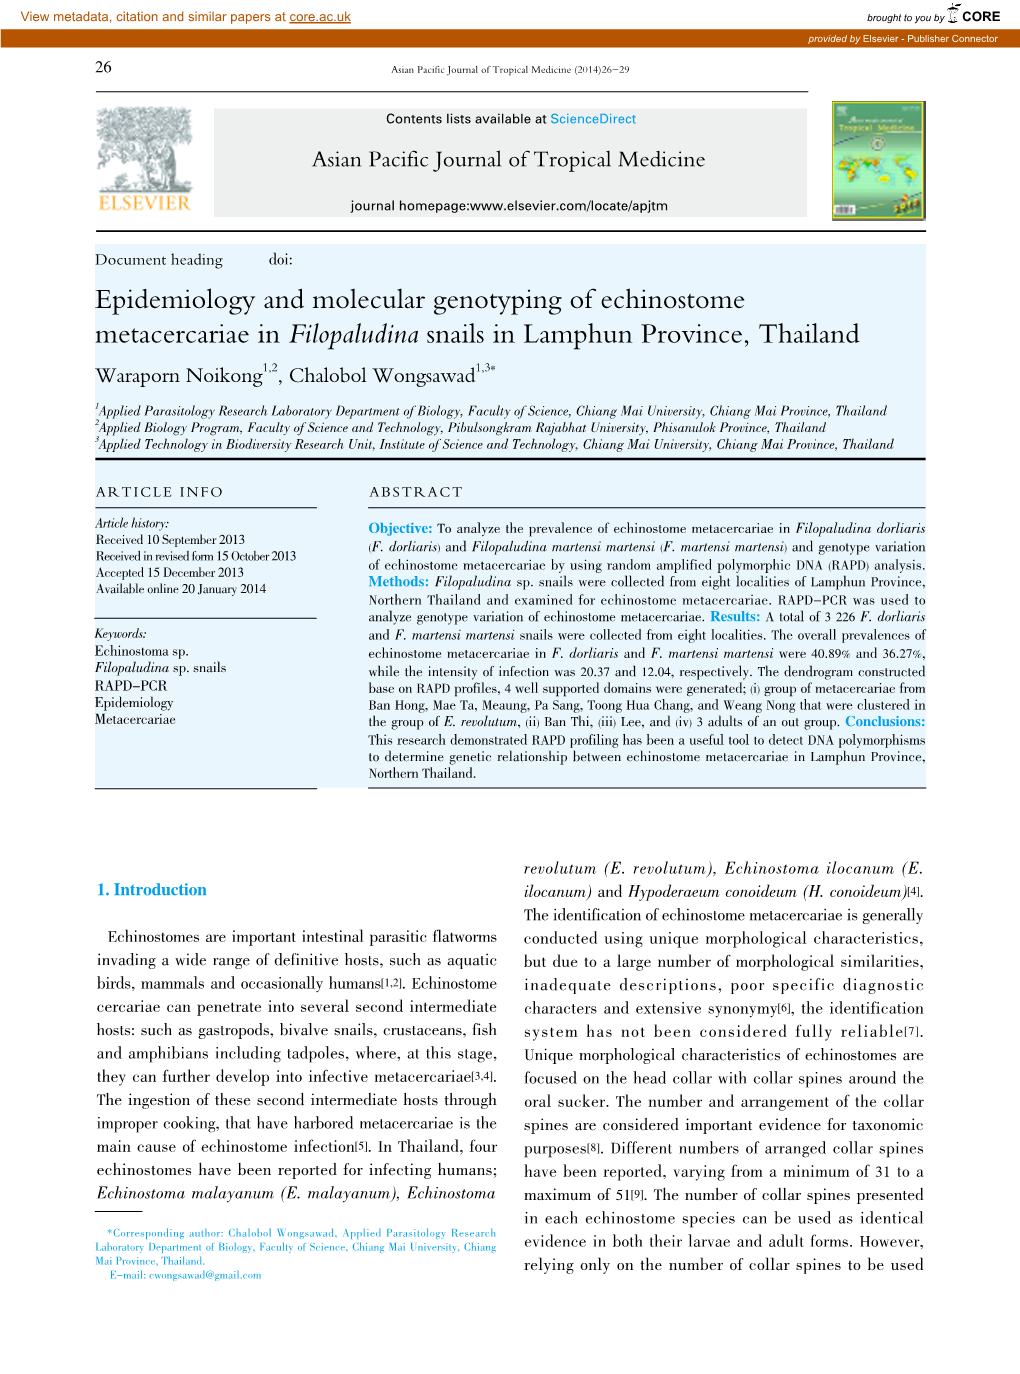 Epidemiology and Molecular Genotyping of Echinostome Metacercariae in Filopaludina Snails in Lamphun Province, Thailand Waraporn Noikong1,2, Chalobol Wongsawad1,3*